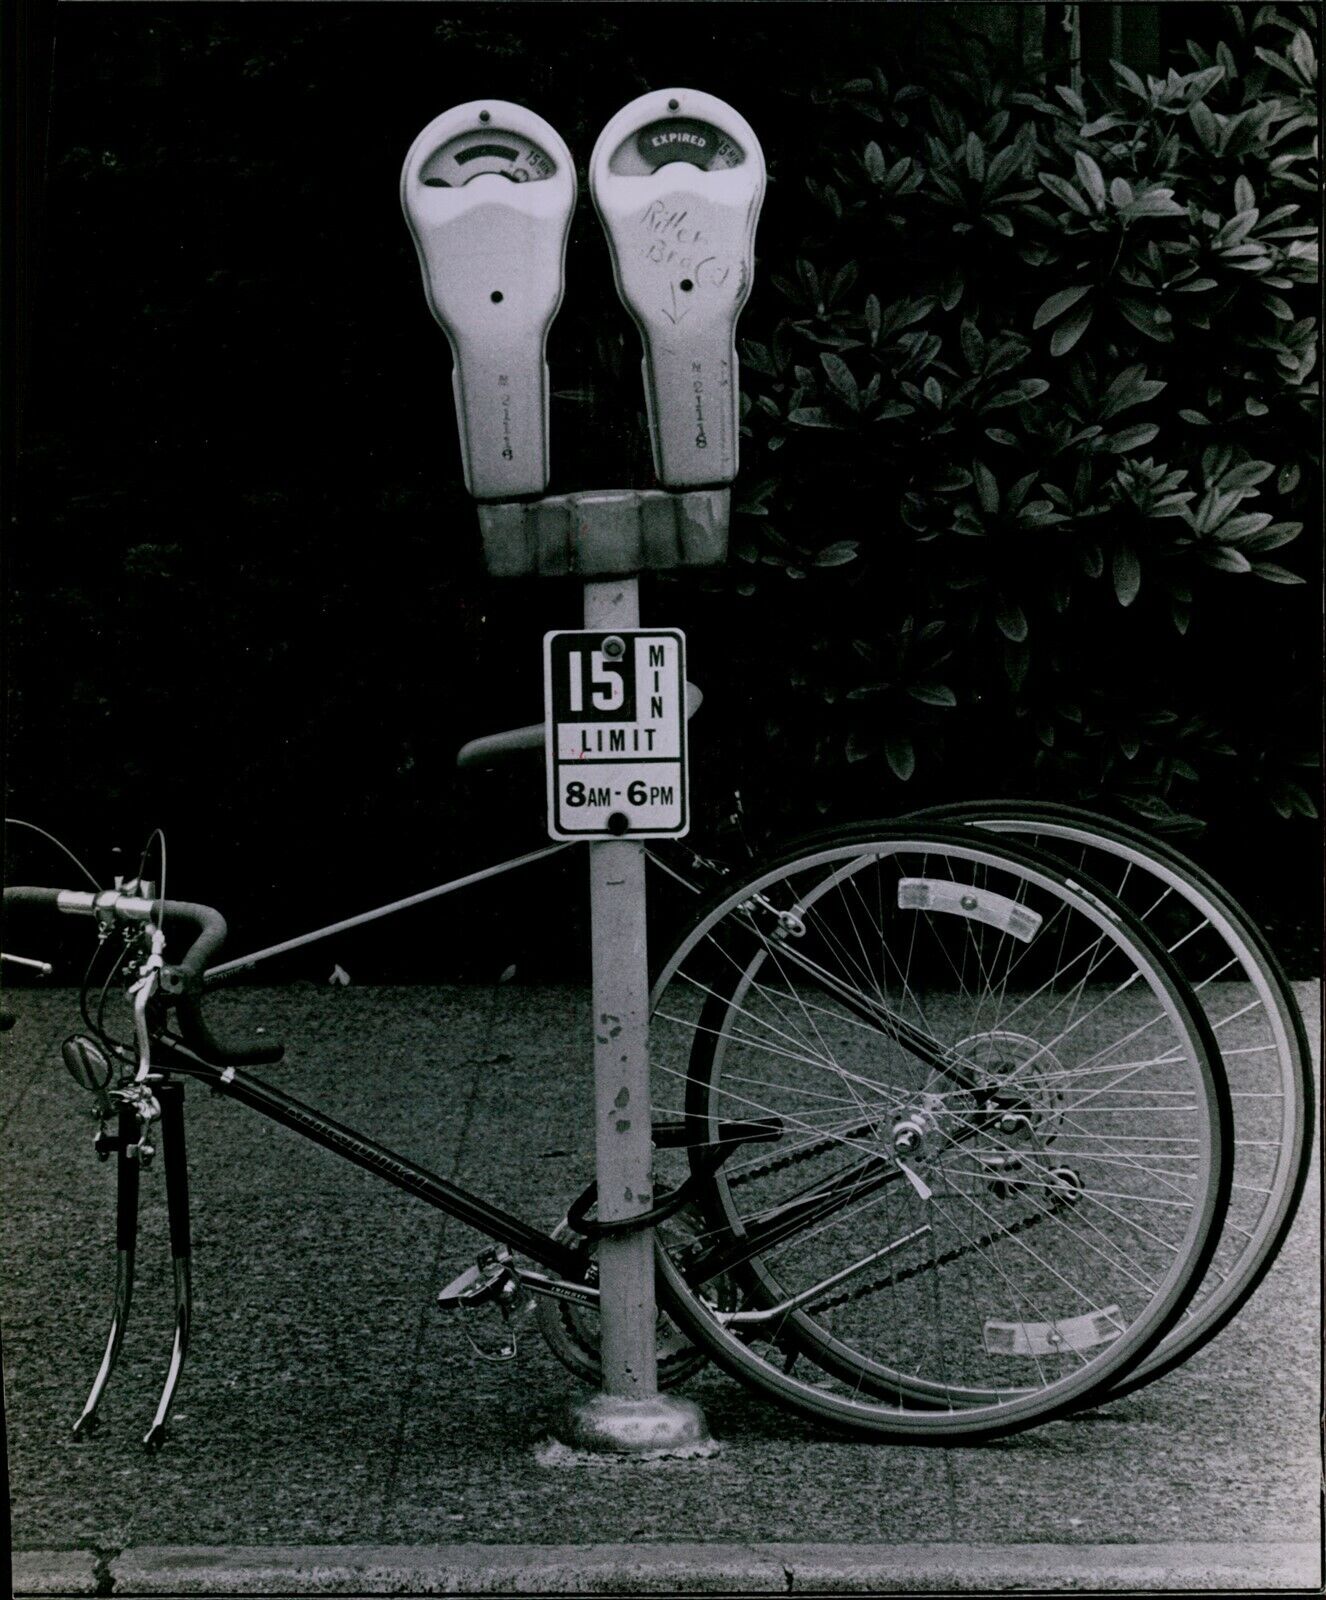 LG843 1981 Orig Bruce McKim Photo ISN'T THIS OVERDOING IT Bicycle Disassembled